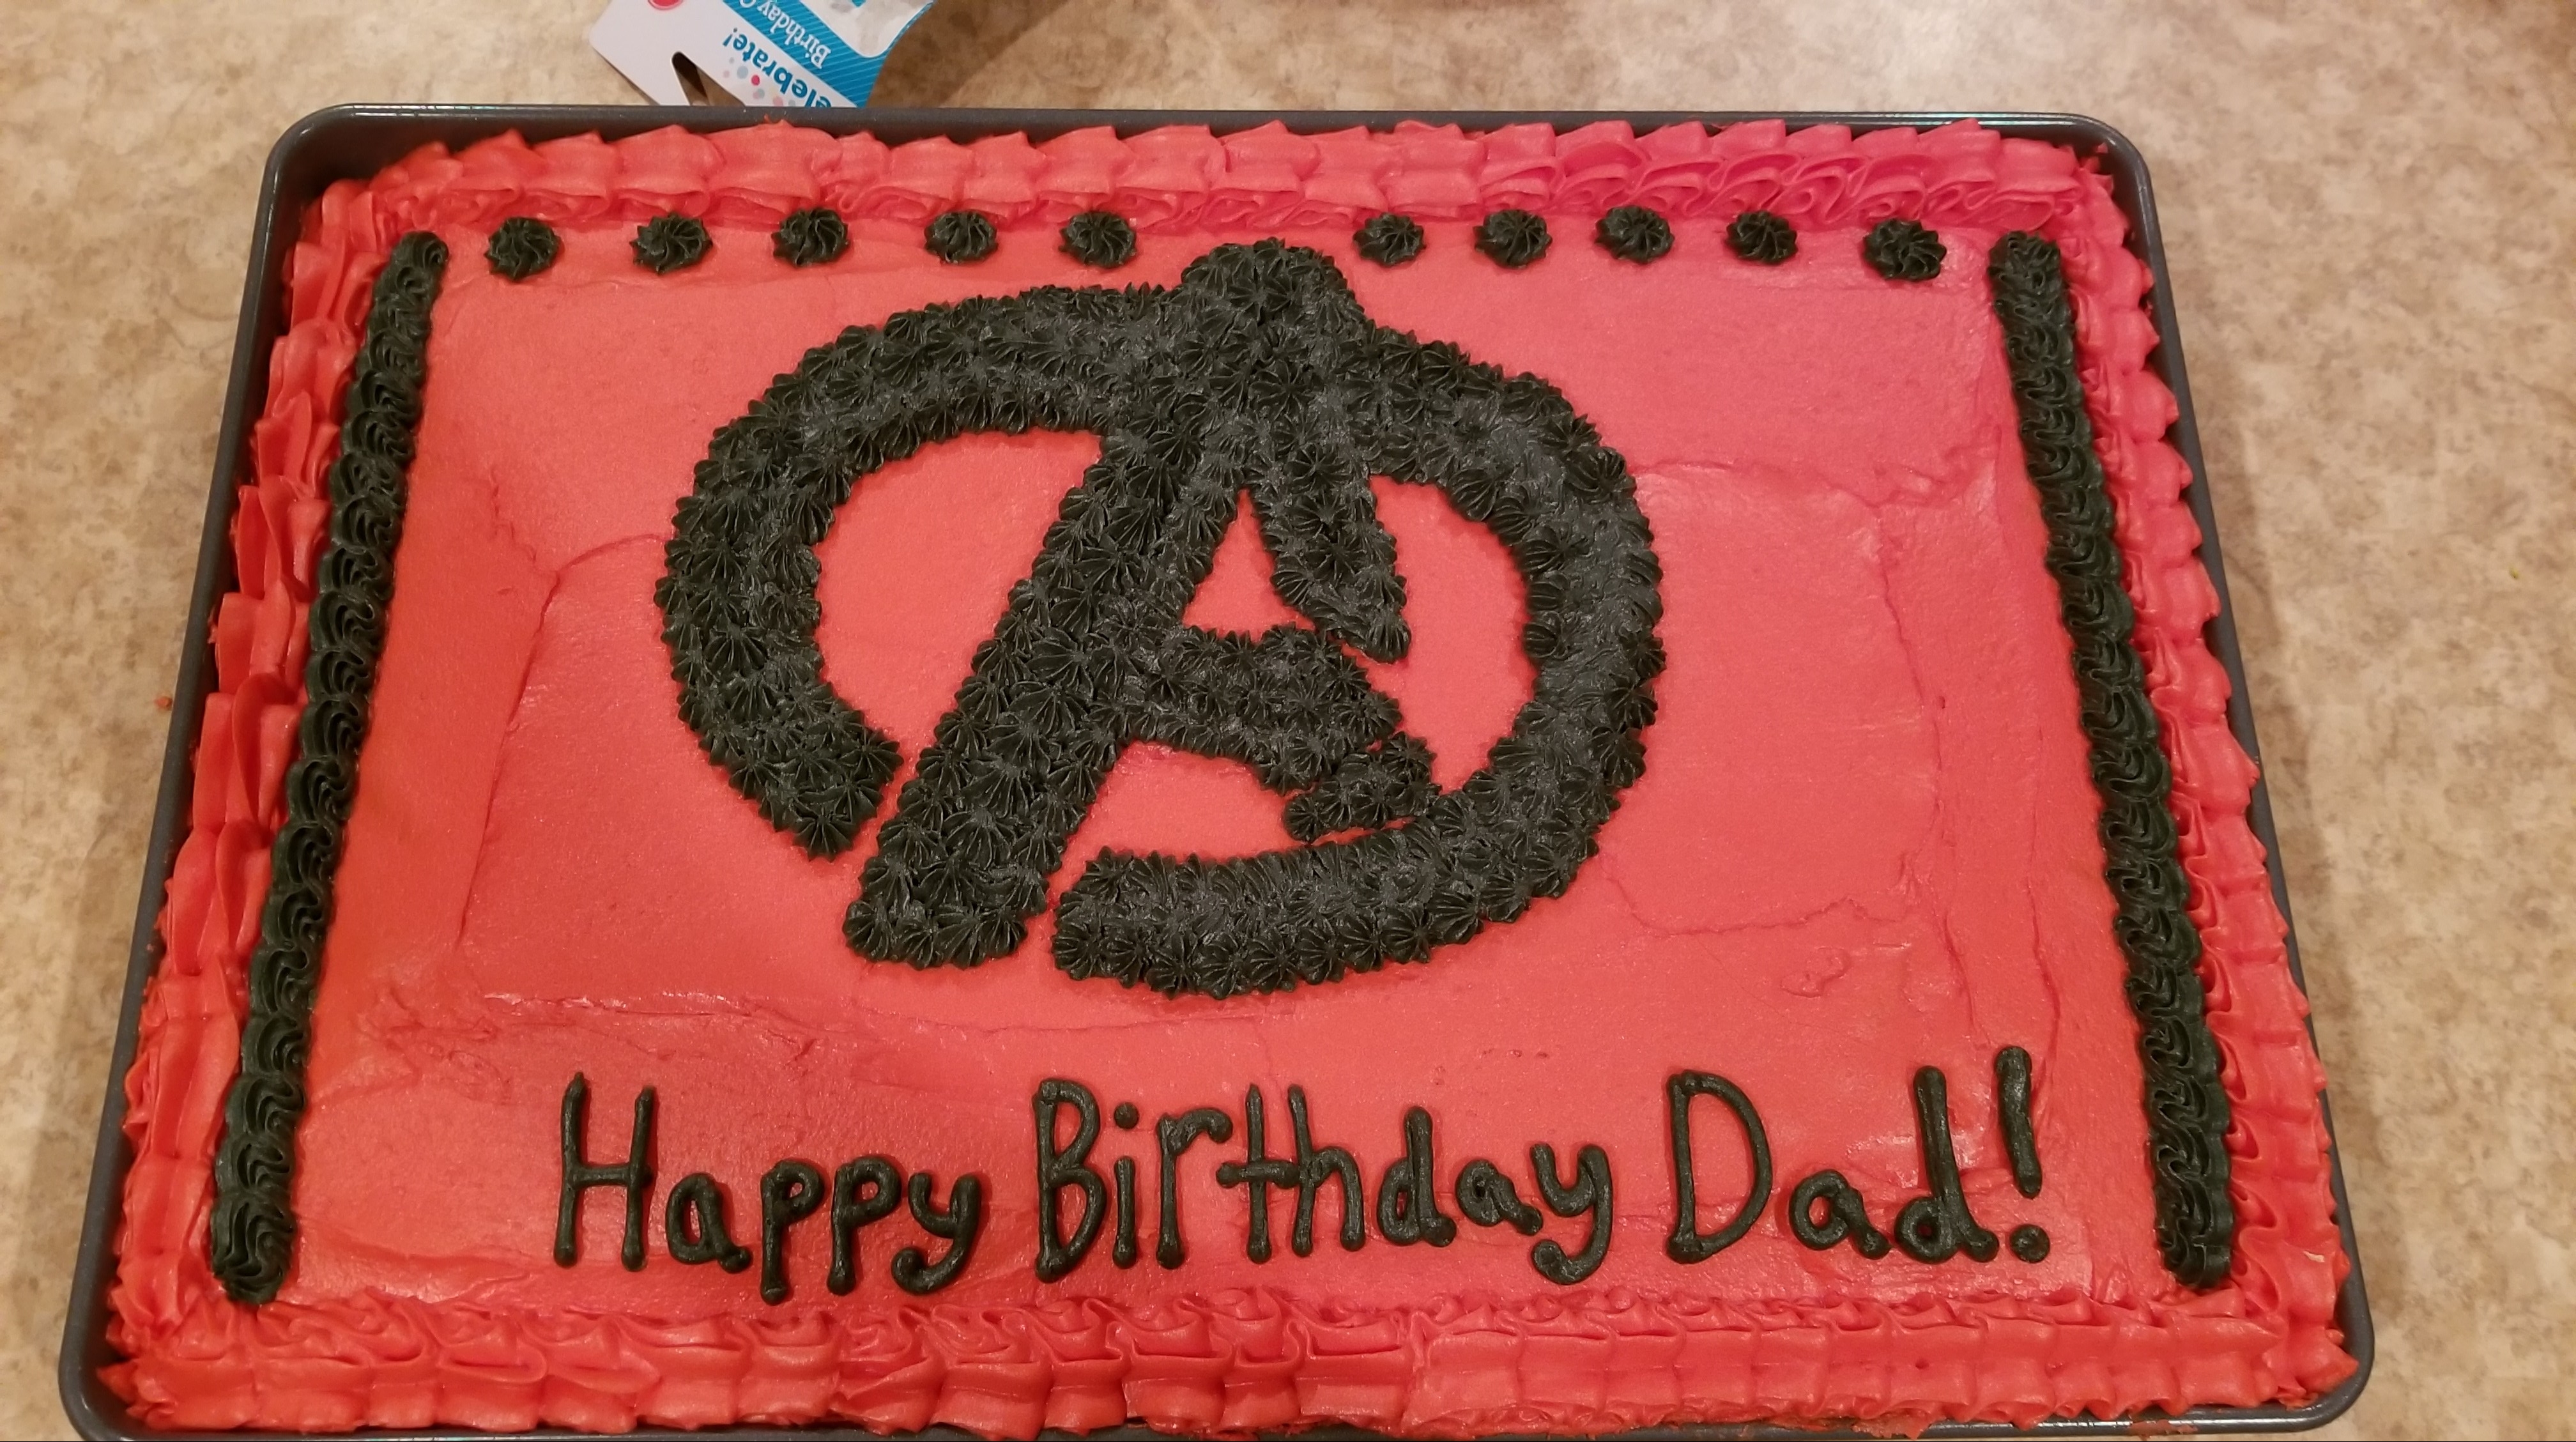 Dad's Birthday Cake!